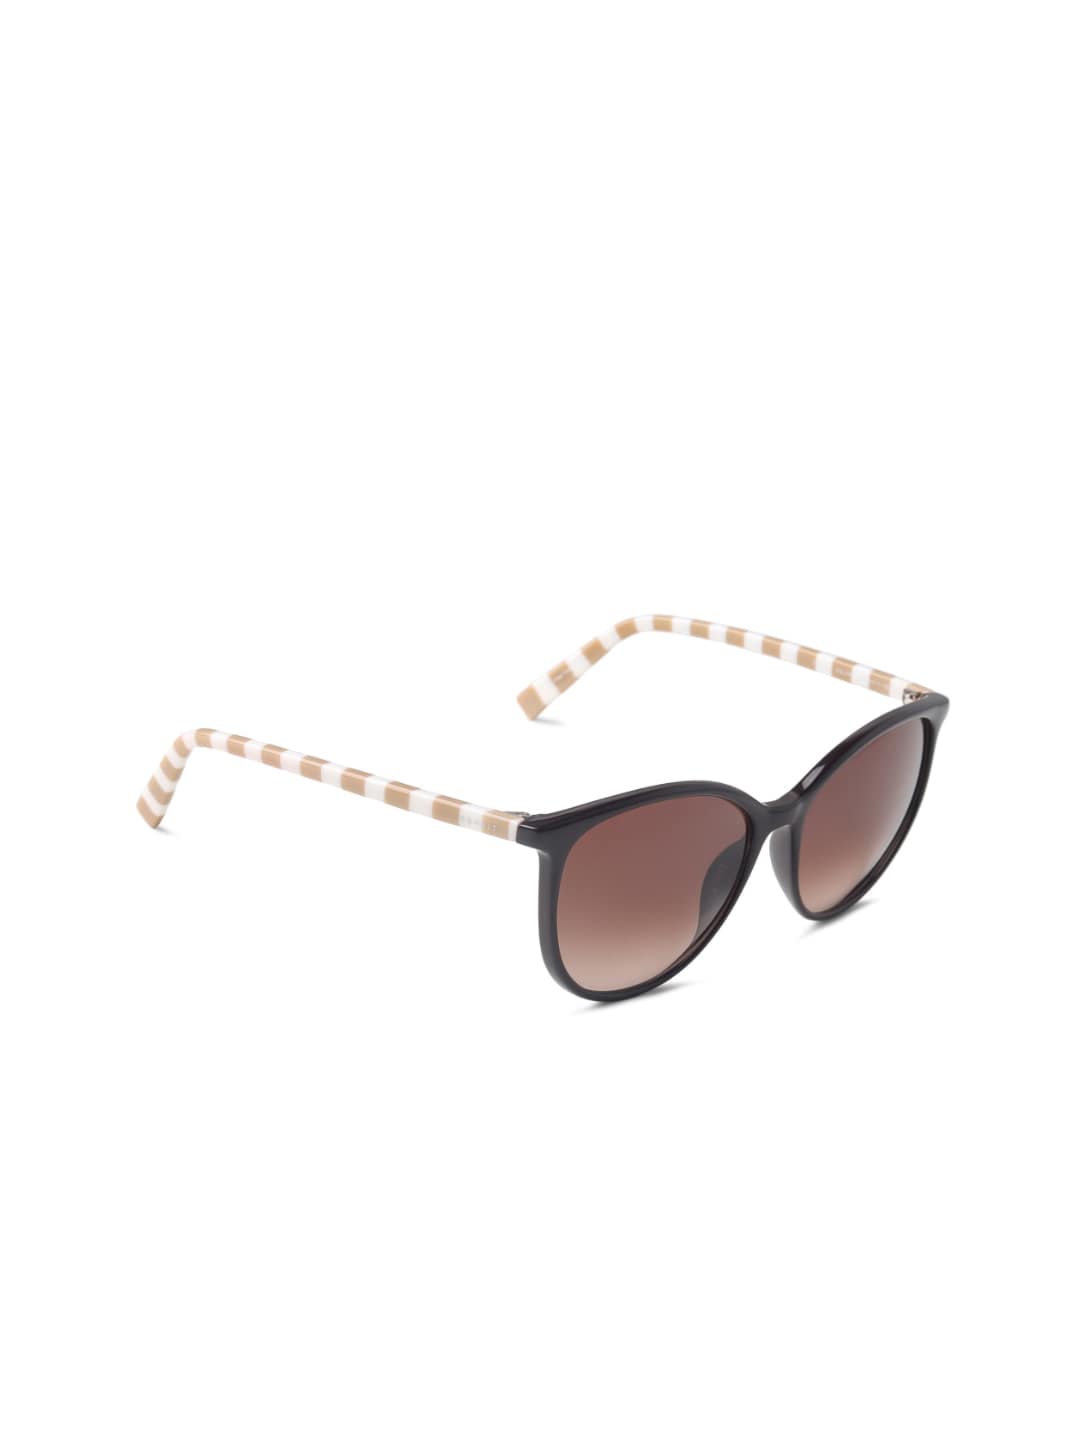 ESPRIT Women Brown Lens & Black Wayfarer Sunglasses with UV Protected Lens ET17925-55-535 Price in India